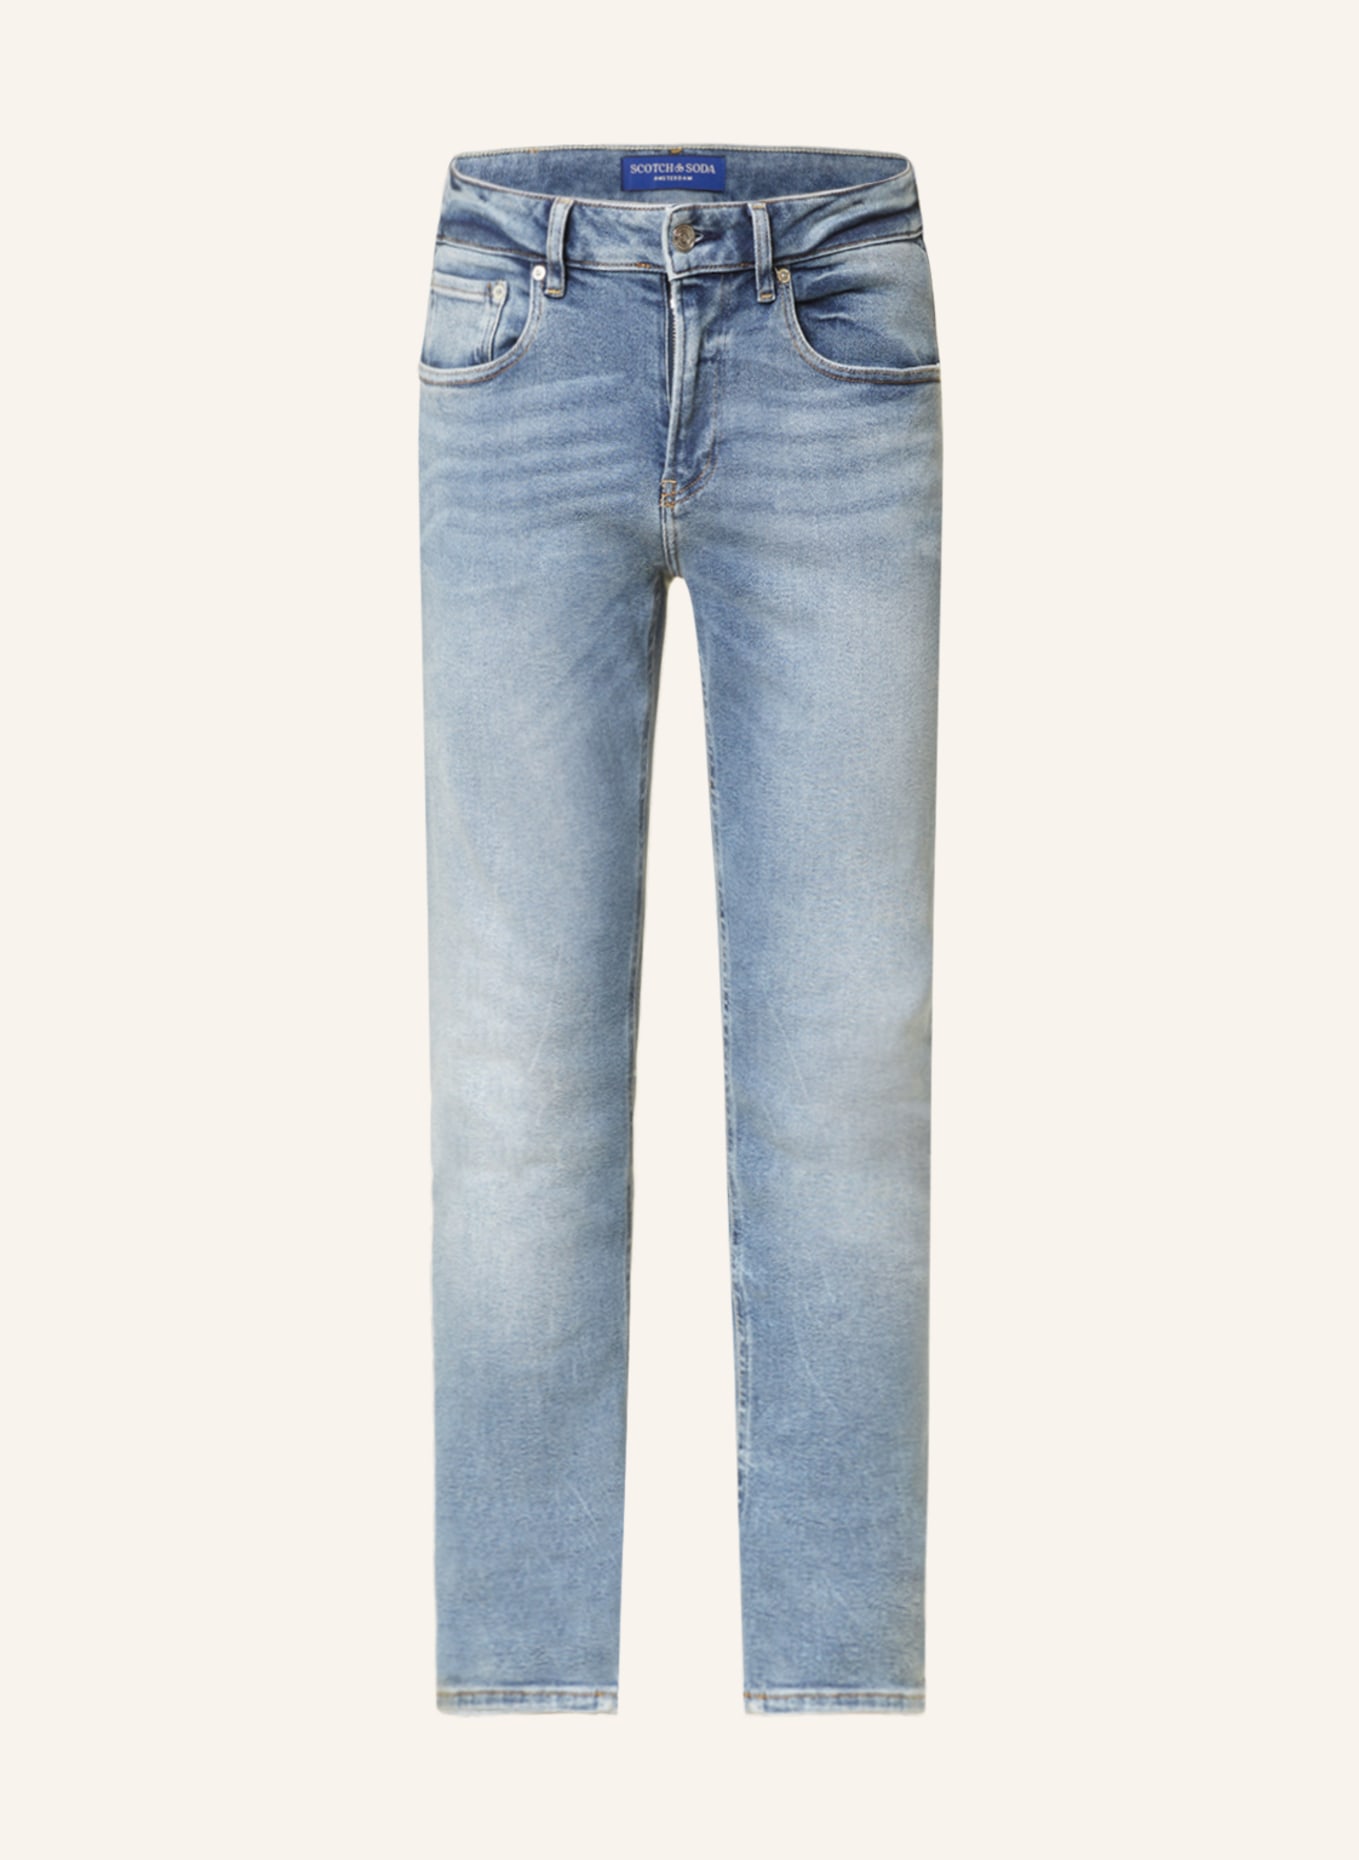 SCOTCH & SODA Jeans SKIM Skinny Fit, Farbe: 6253 Rhythm And Blue (Bild 1)